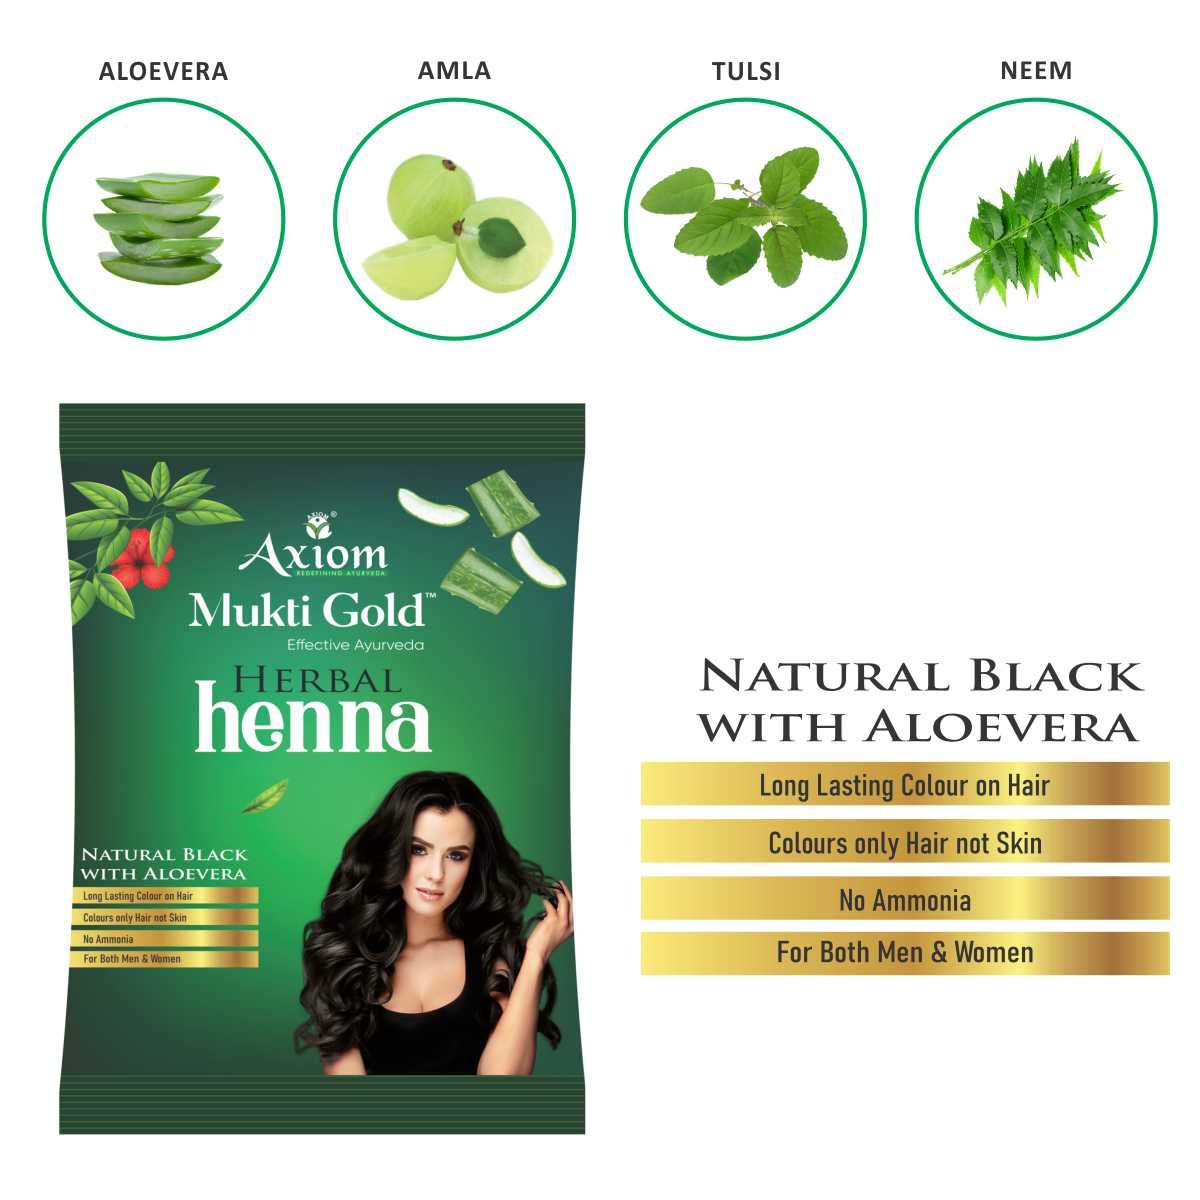 Axiom Mukti Gold Herbal Heena 10 grms Natural Black With Aloevera Pack of 1